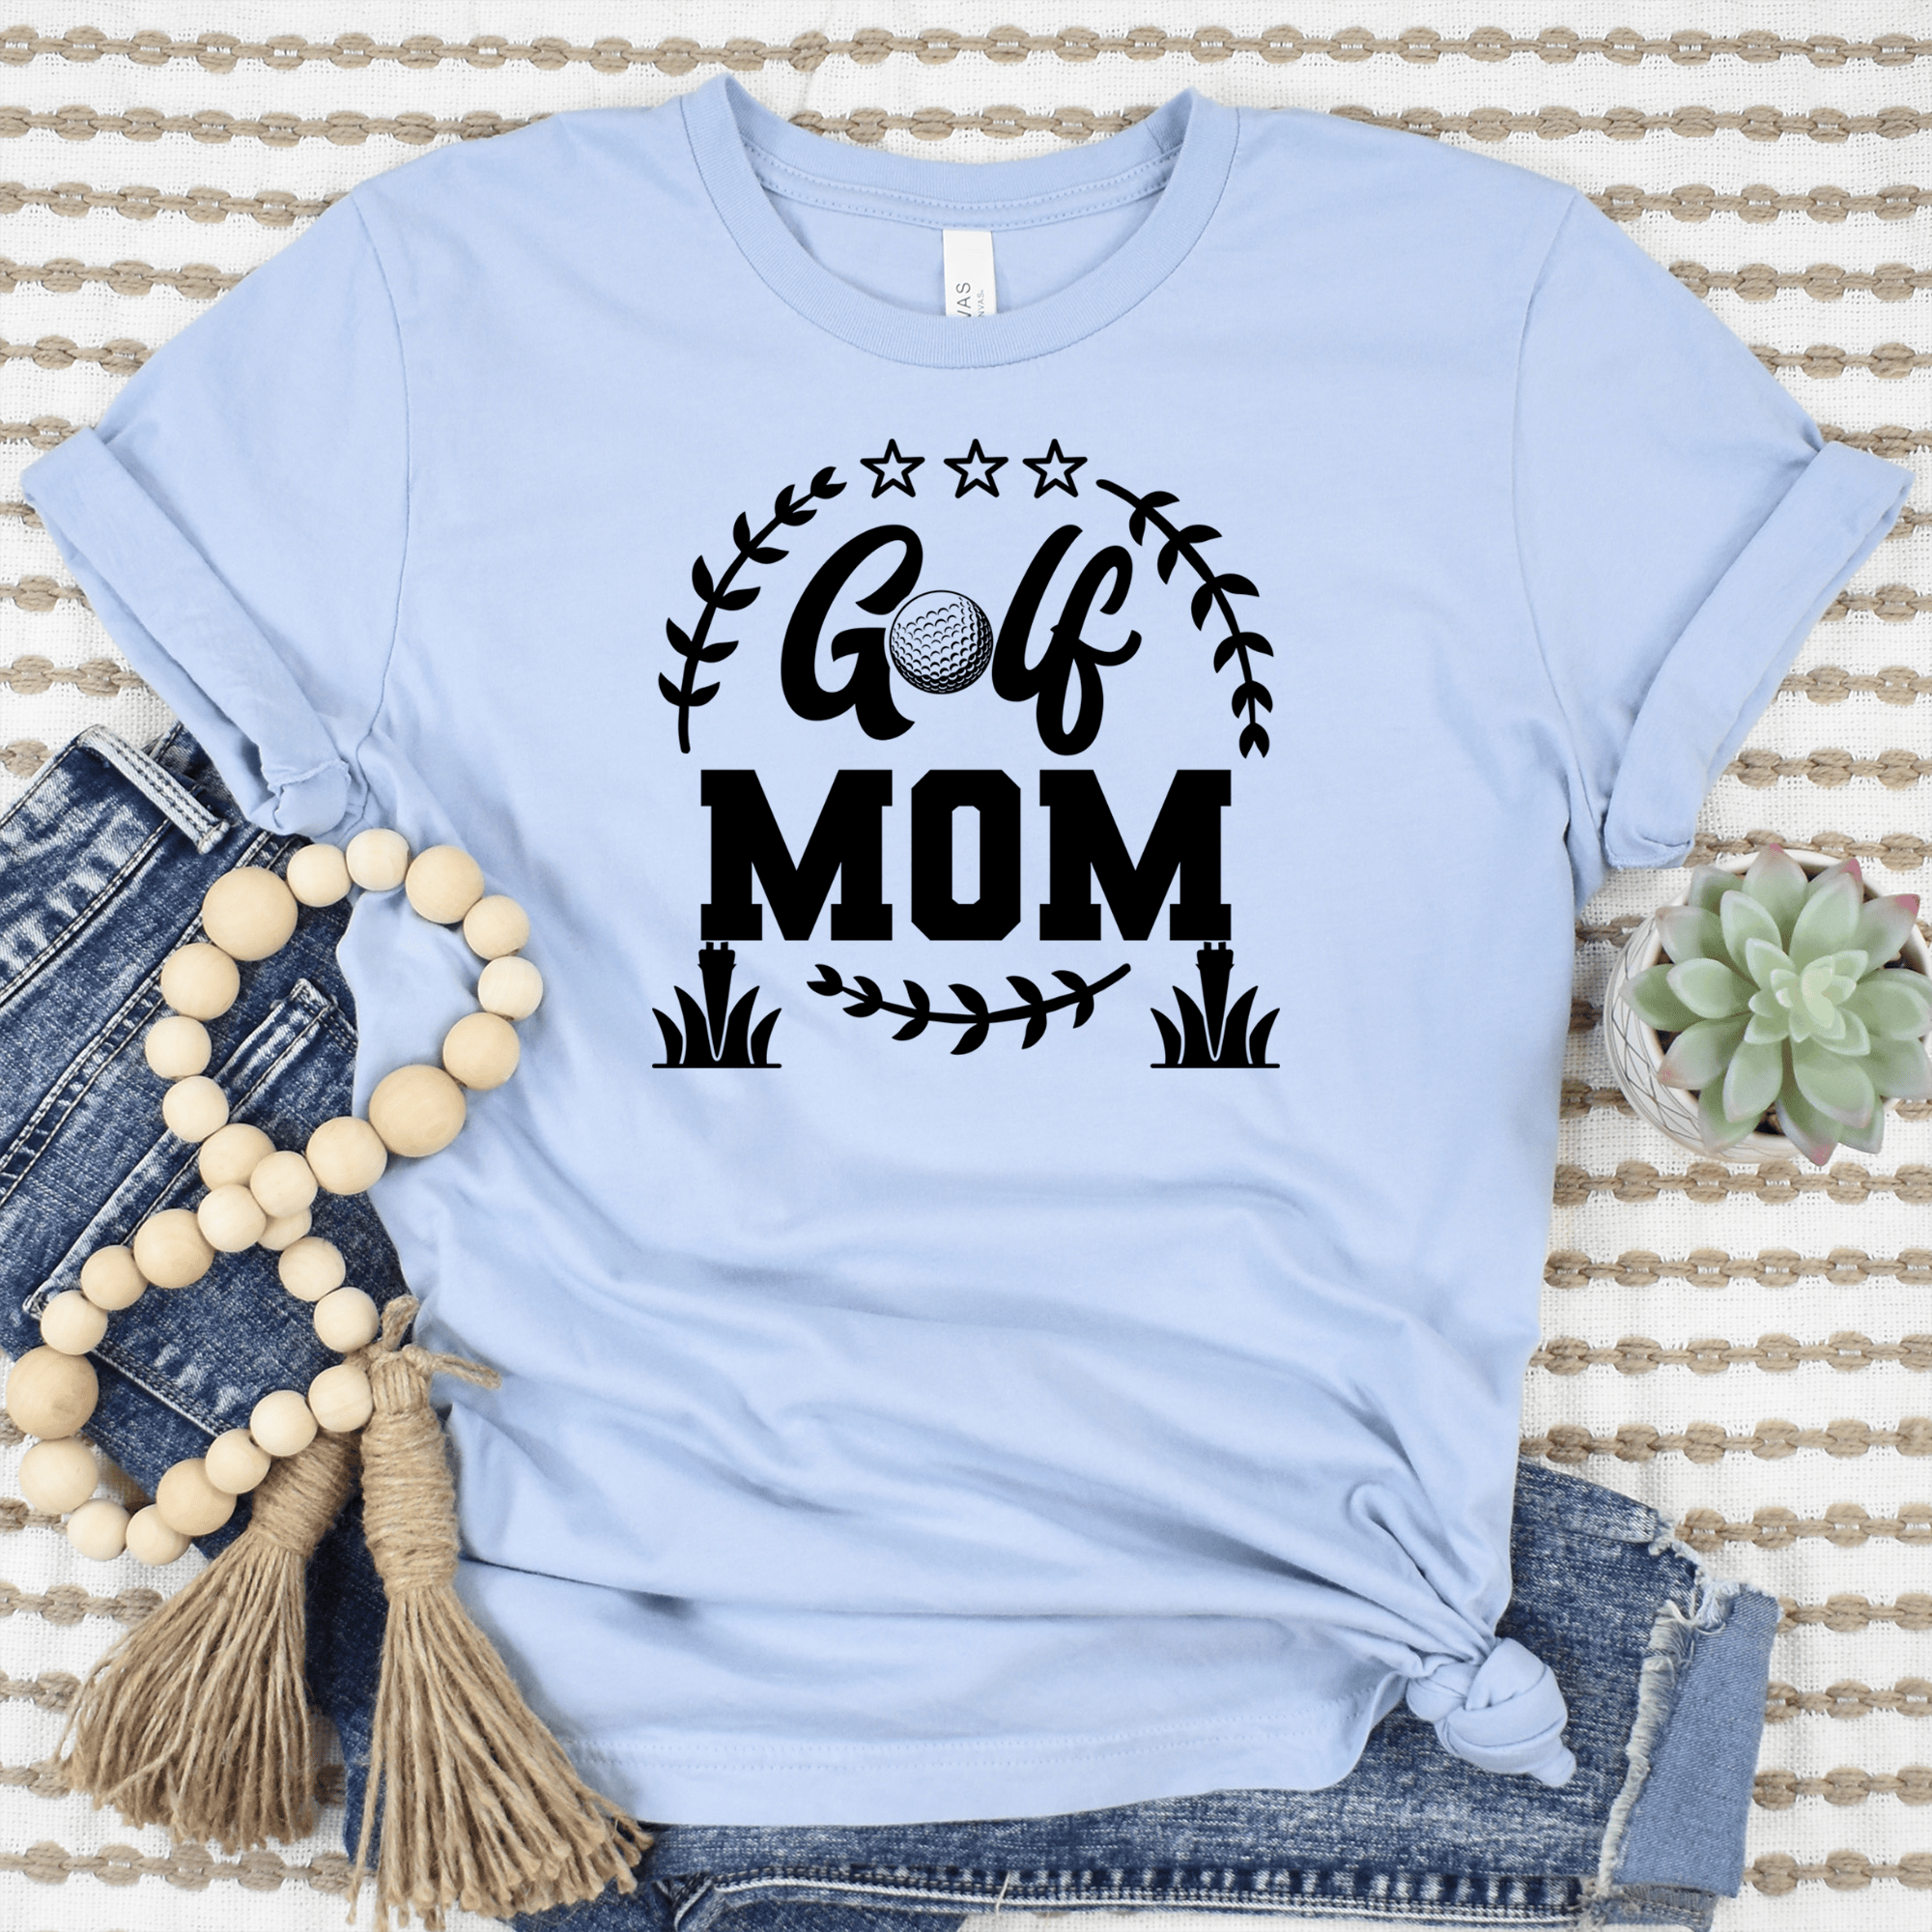 Womens Light Blue T Shirt with Professional-Golf-Mom design